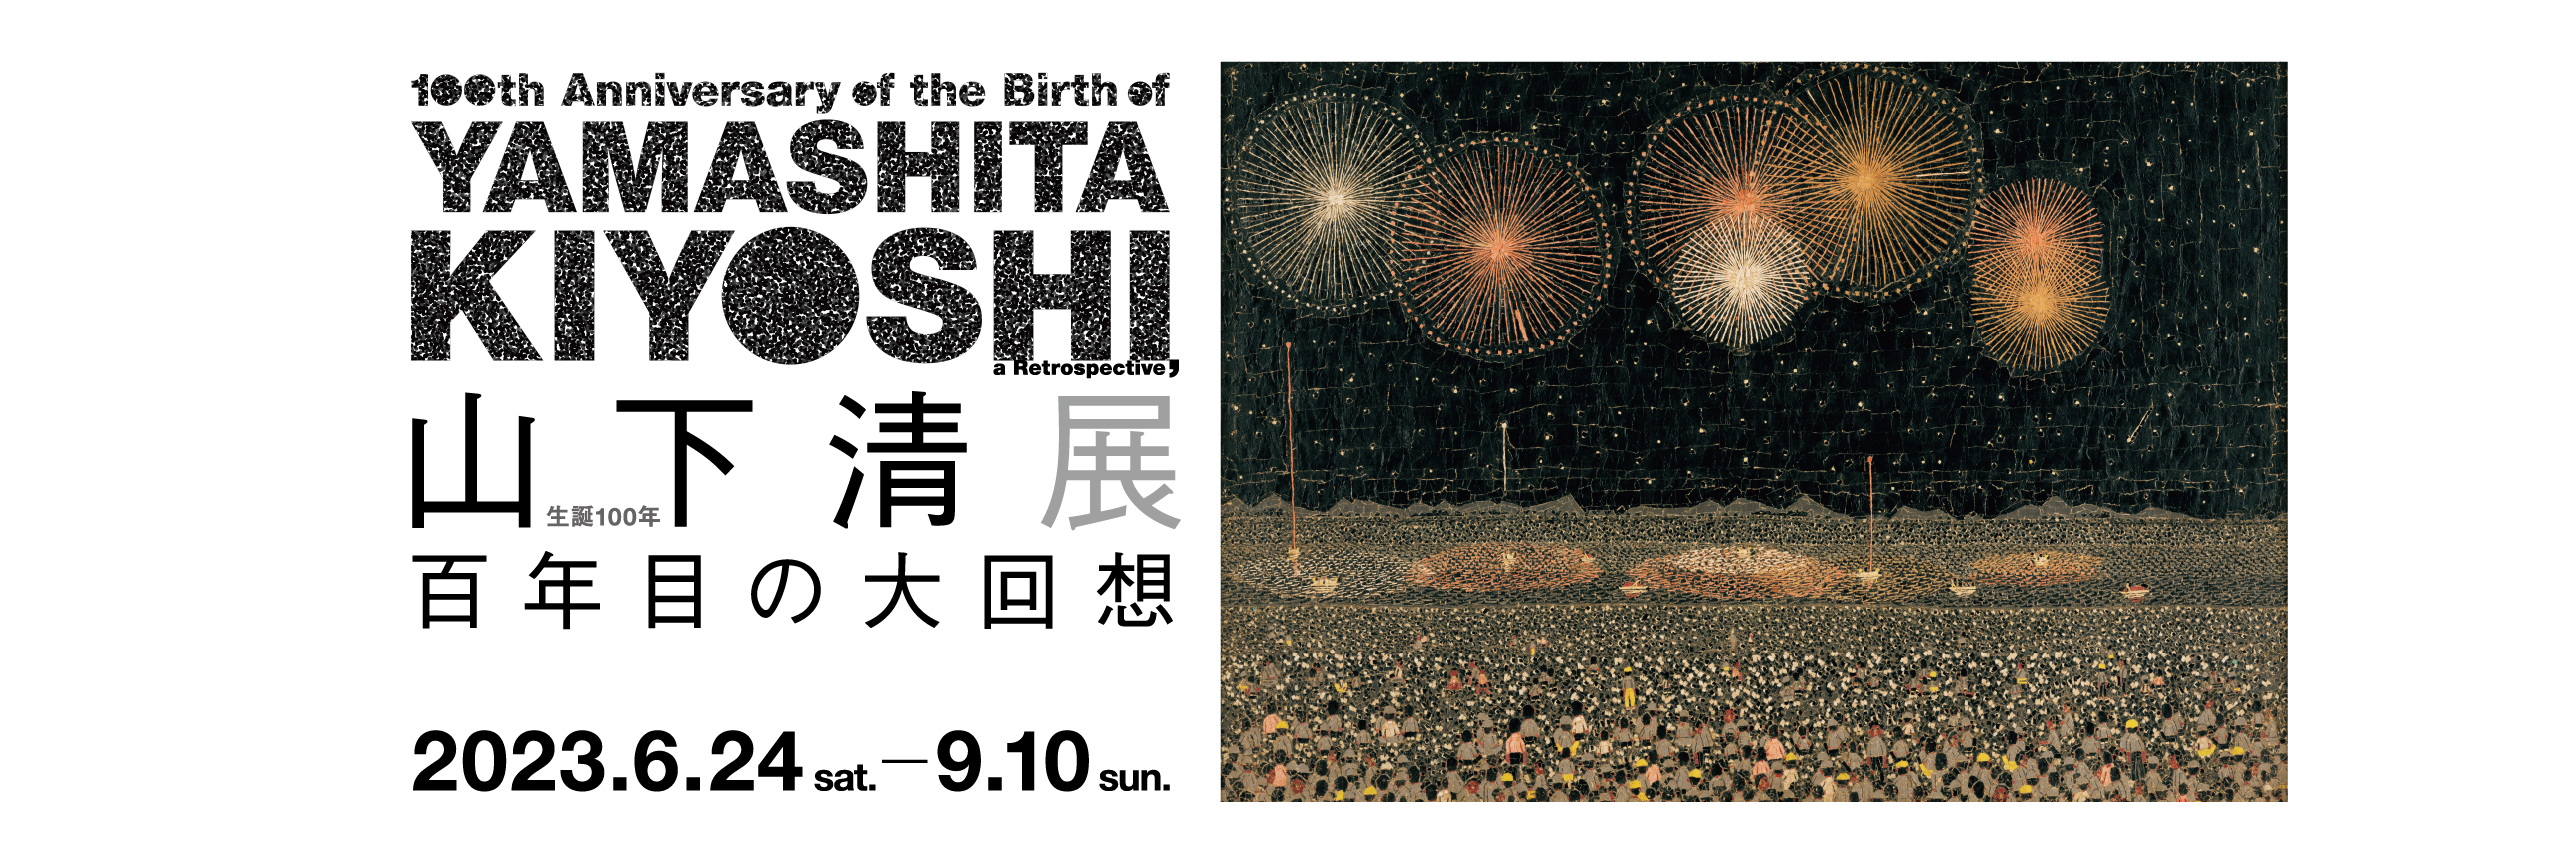 100th Anniversary of the Birth of YAMASHITA KIYOSHI, a Retrospective